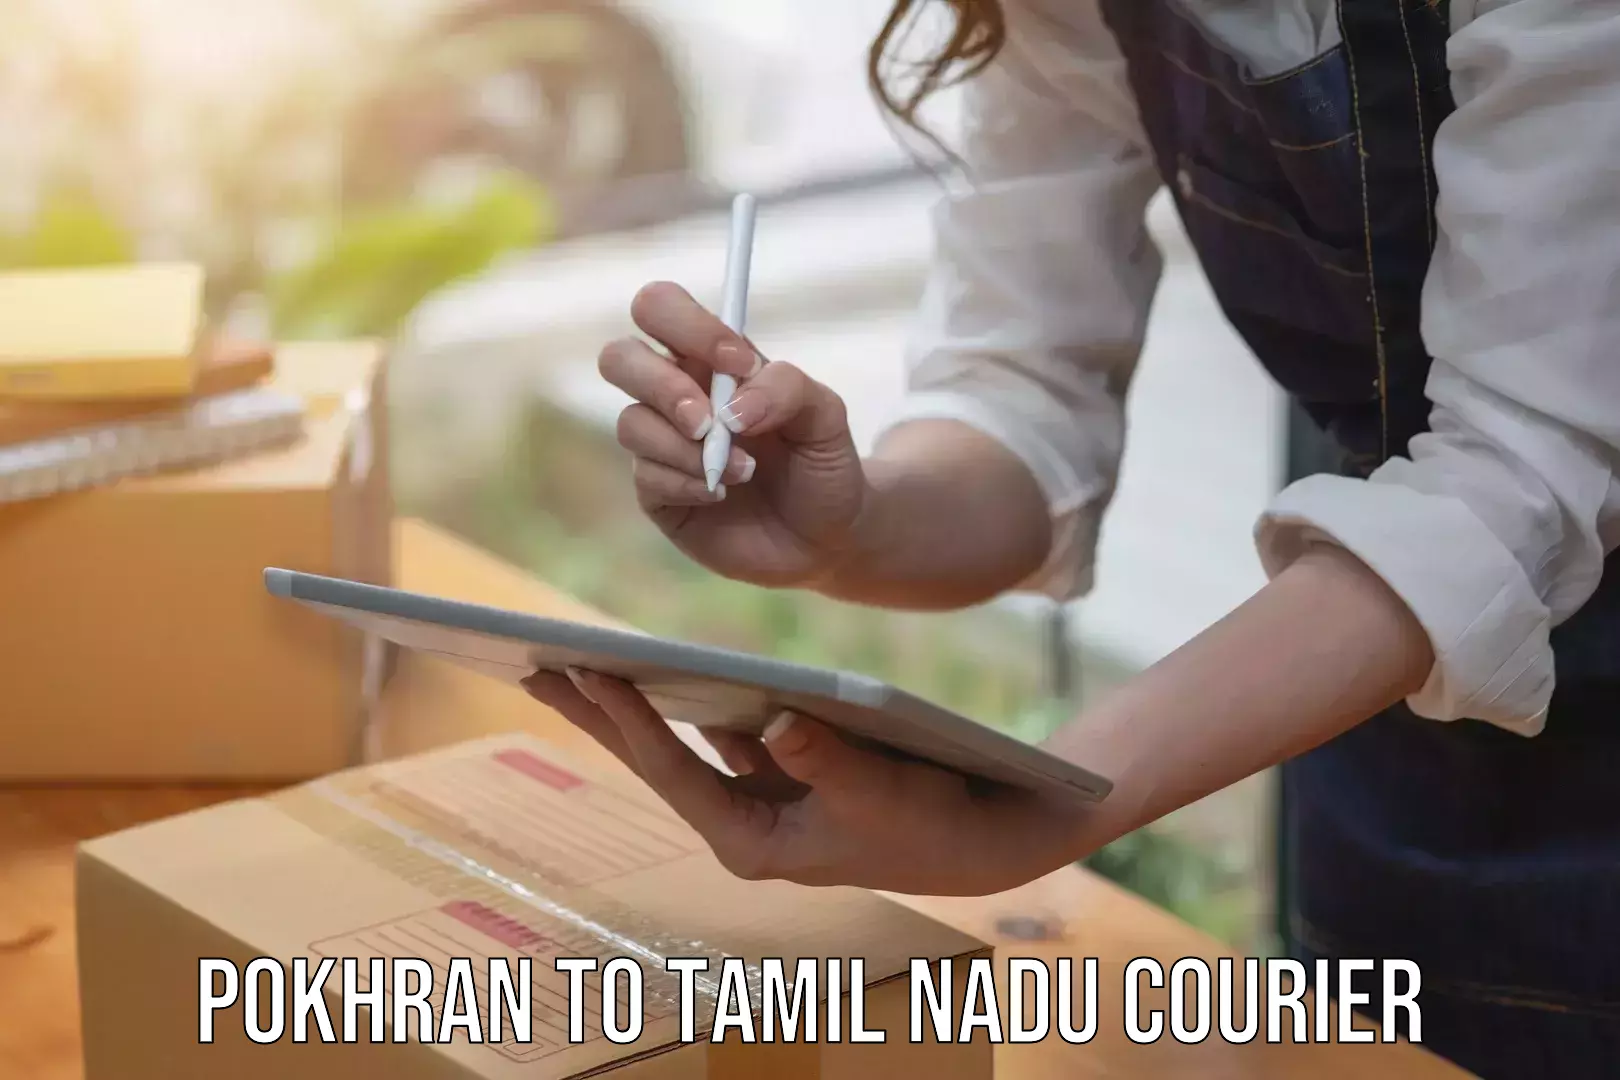 Easy return solutions Pokhran to Tamil Nadu